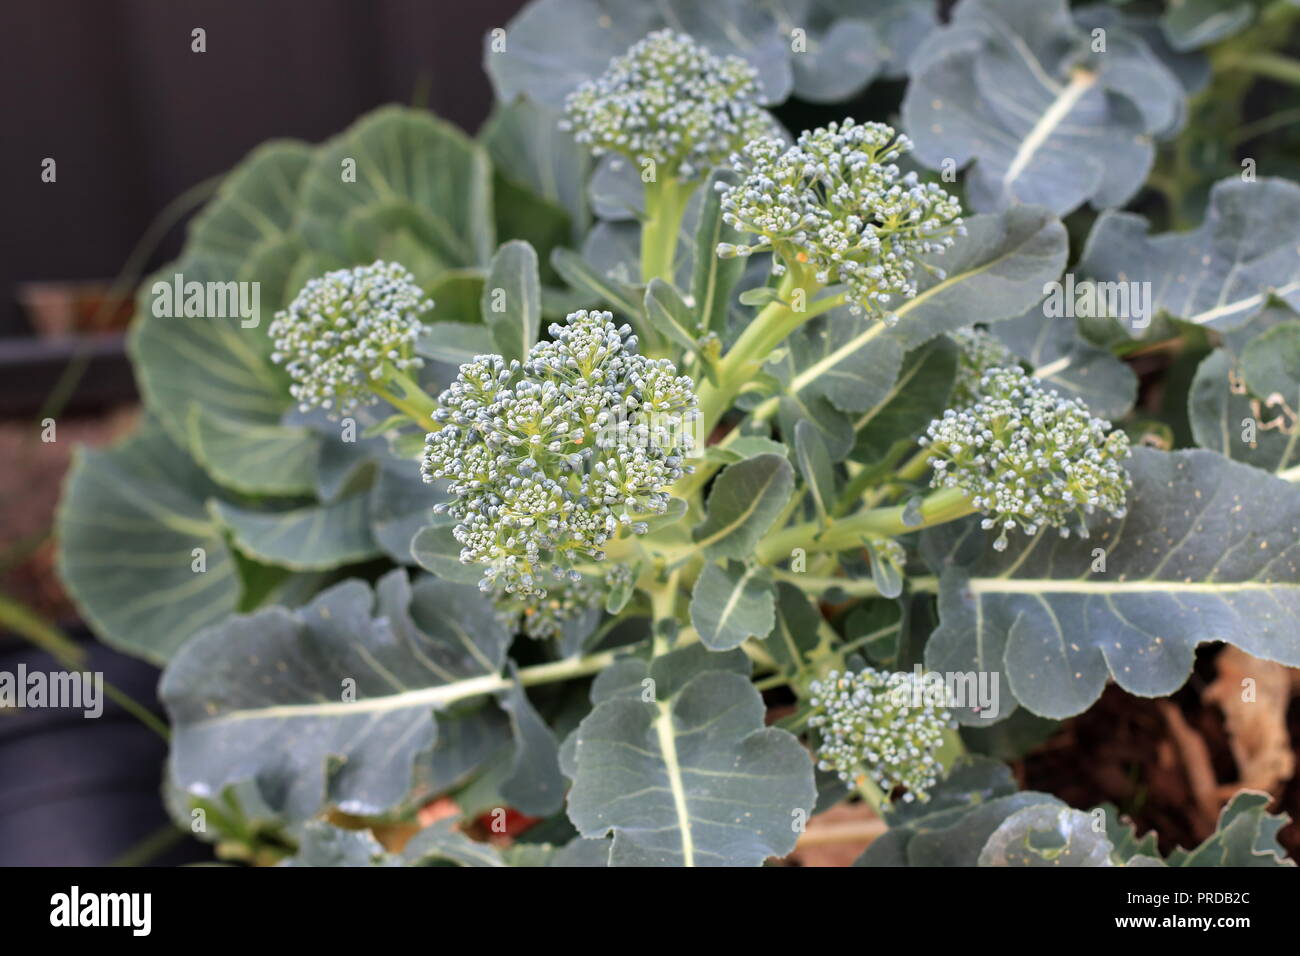 Wachsende Brokkoli auf ein gemüsebeet Stockfoto